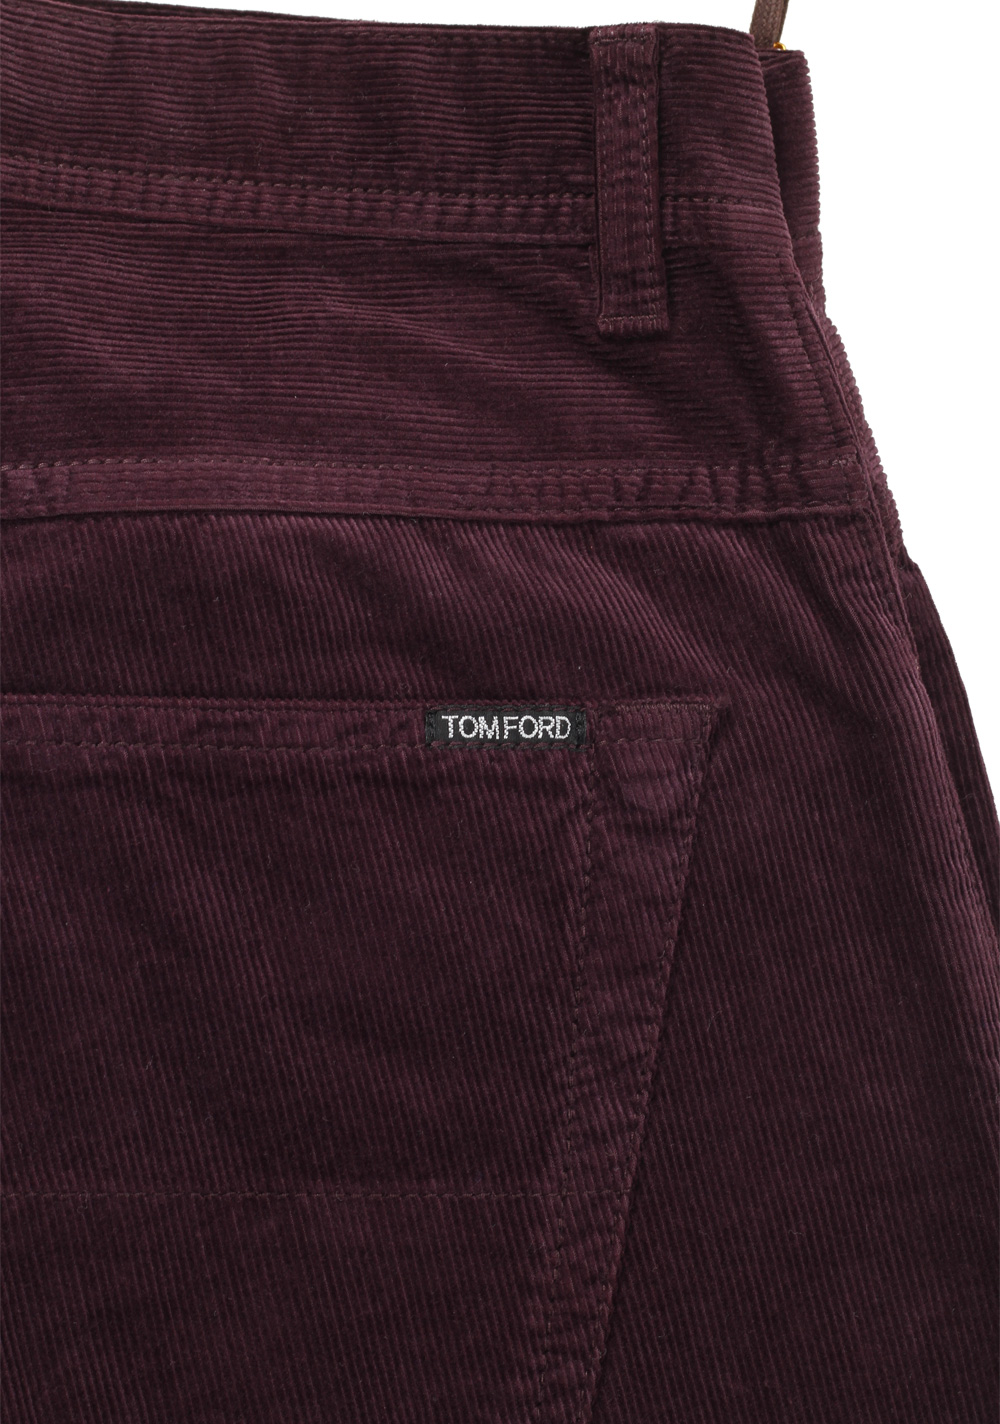 TOM FORD Aubergine Jeans TFD003 Size 48 / 32 U.S. | Costume Limité